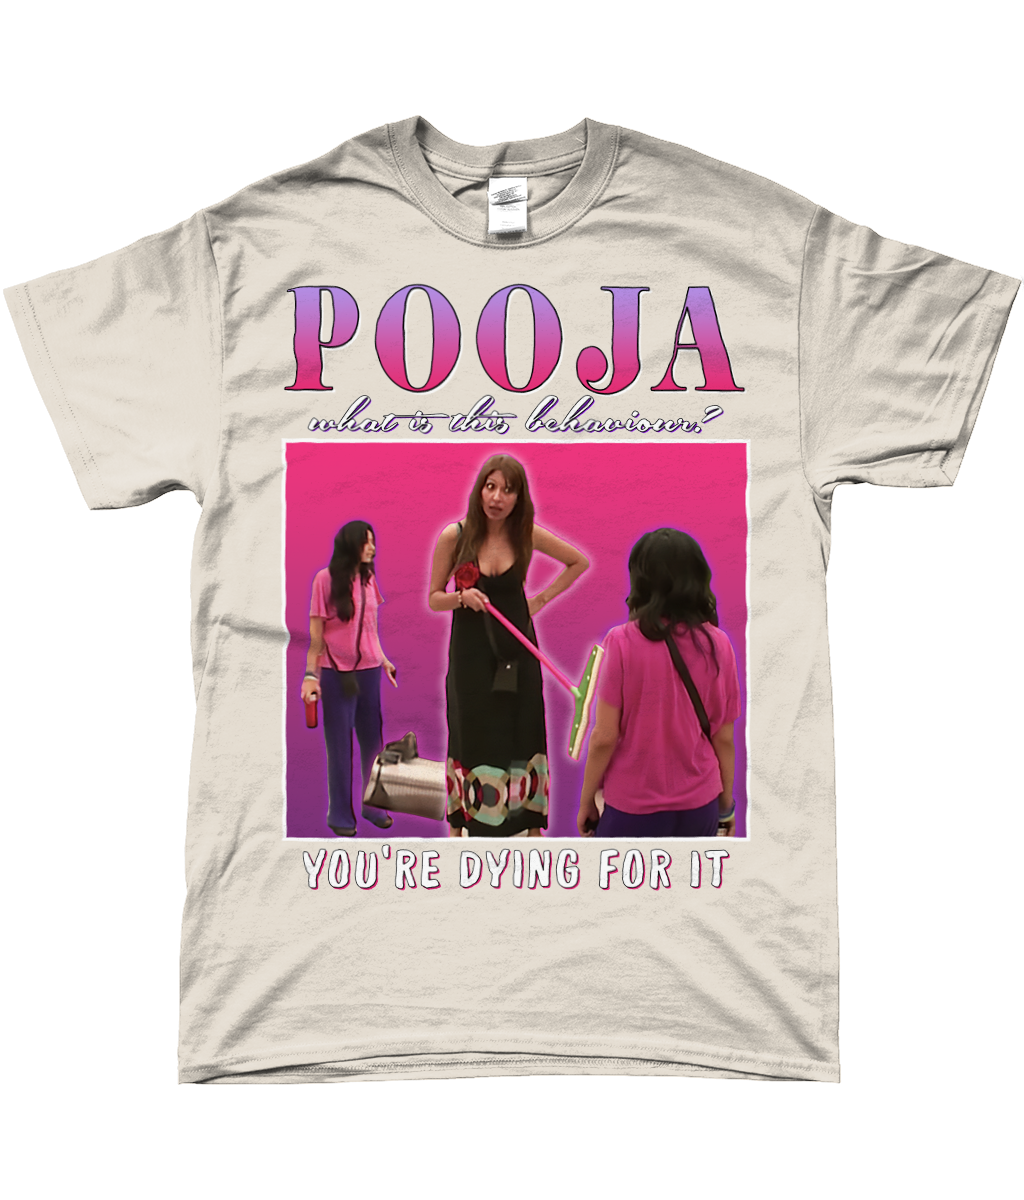 Pooja What Is This Behaviour? Unisex Crewneck T-shirt